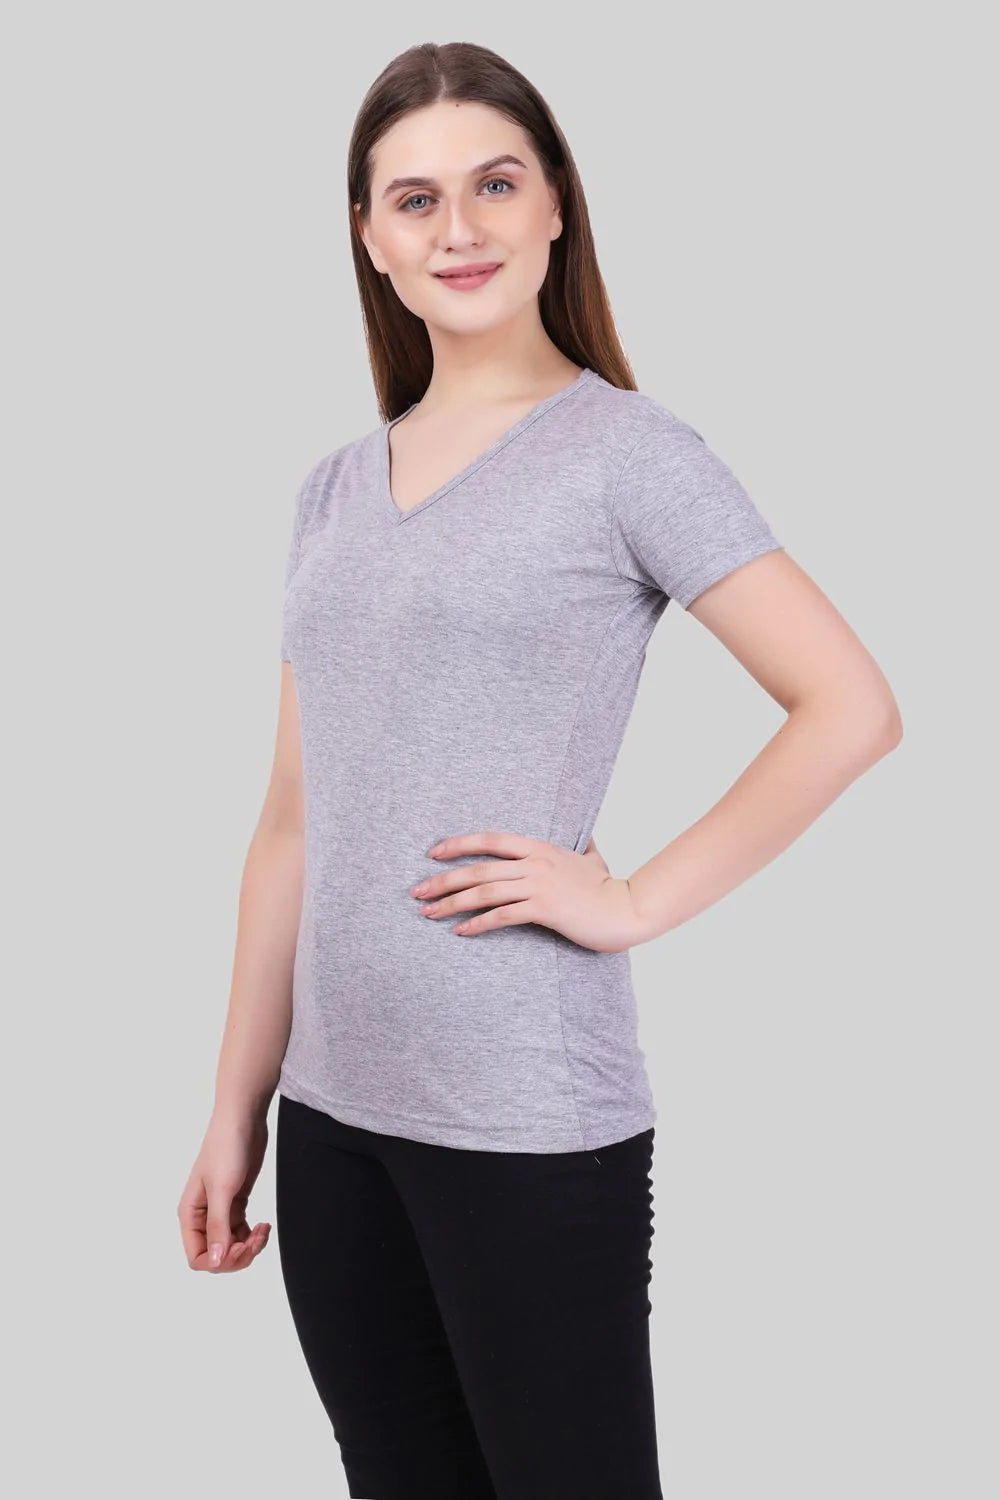 Fleximaa Women's Cotton Plain V Neck Half Sleeve T-Shirt - fleximaa-so